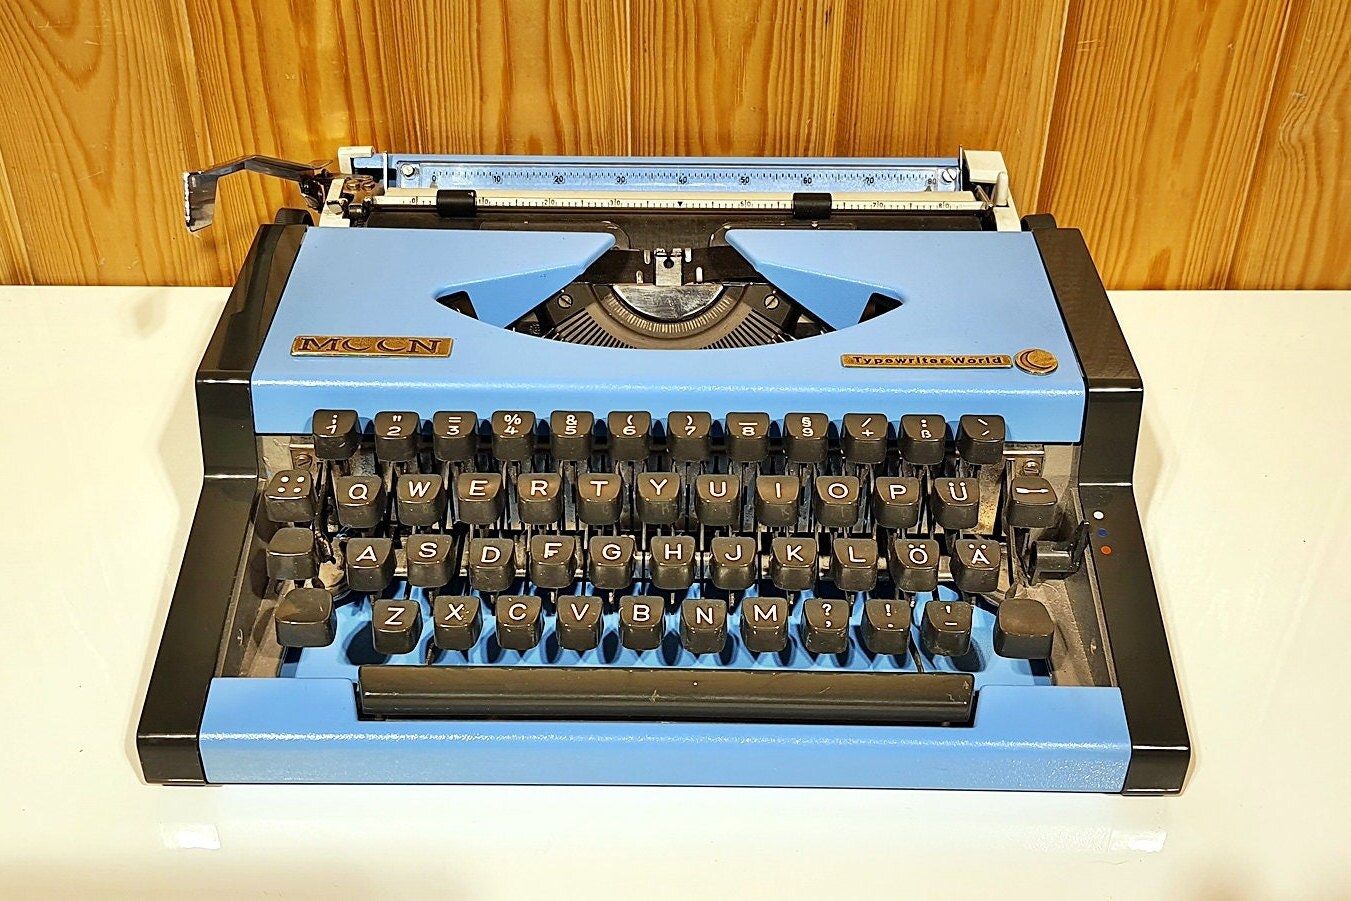 Moon Typewriter Nostalgic Blue / QWERTY Keyboard Typewriter / Typewriter World Brand / Special for Valentine's Day | Typewriter like new